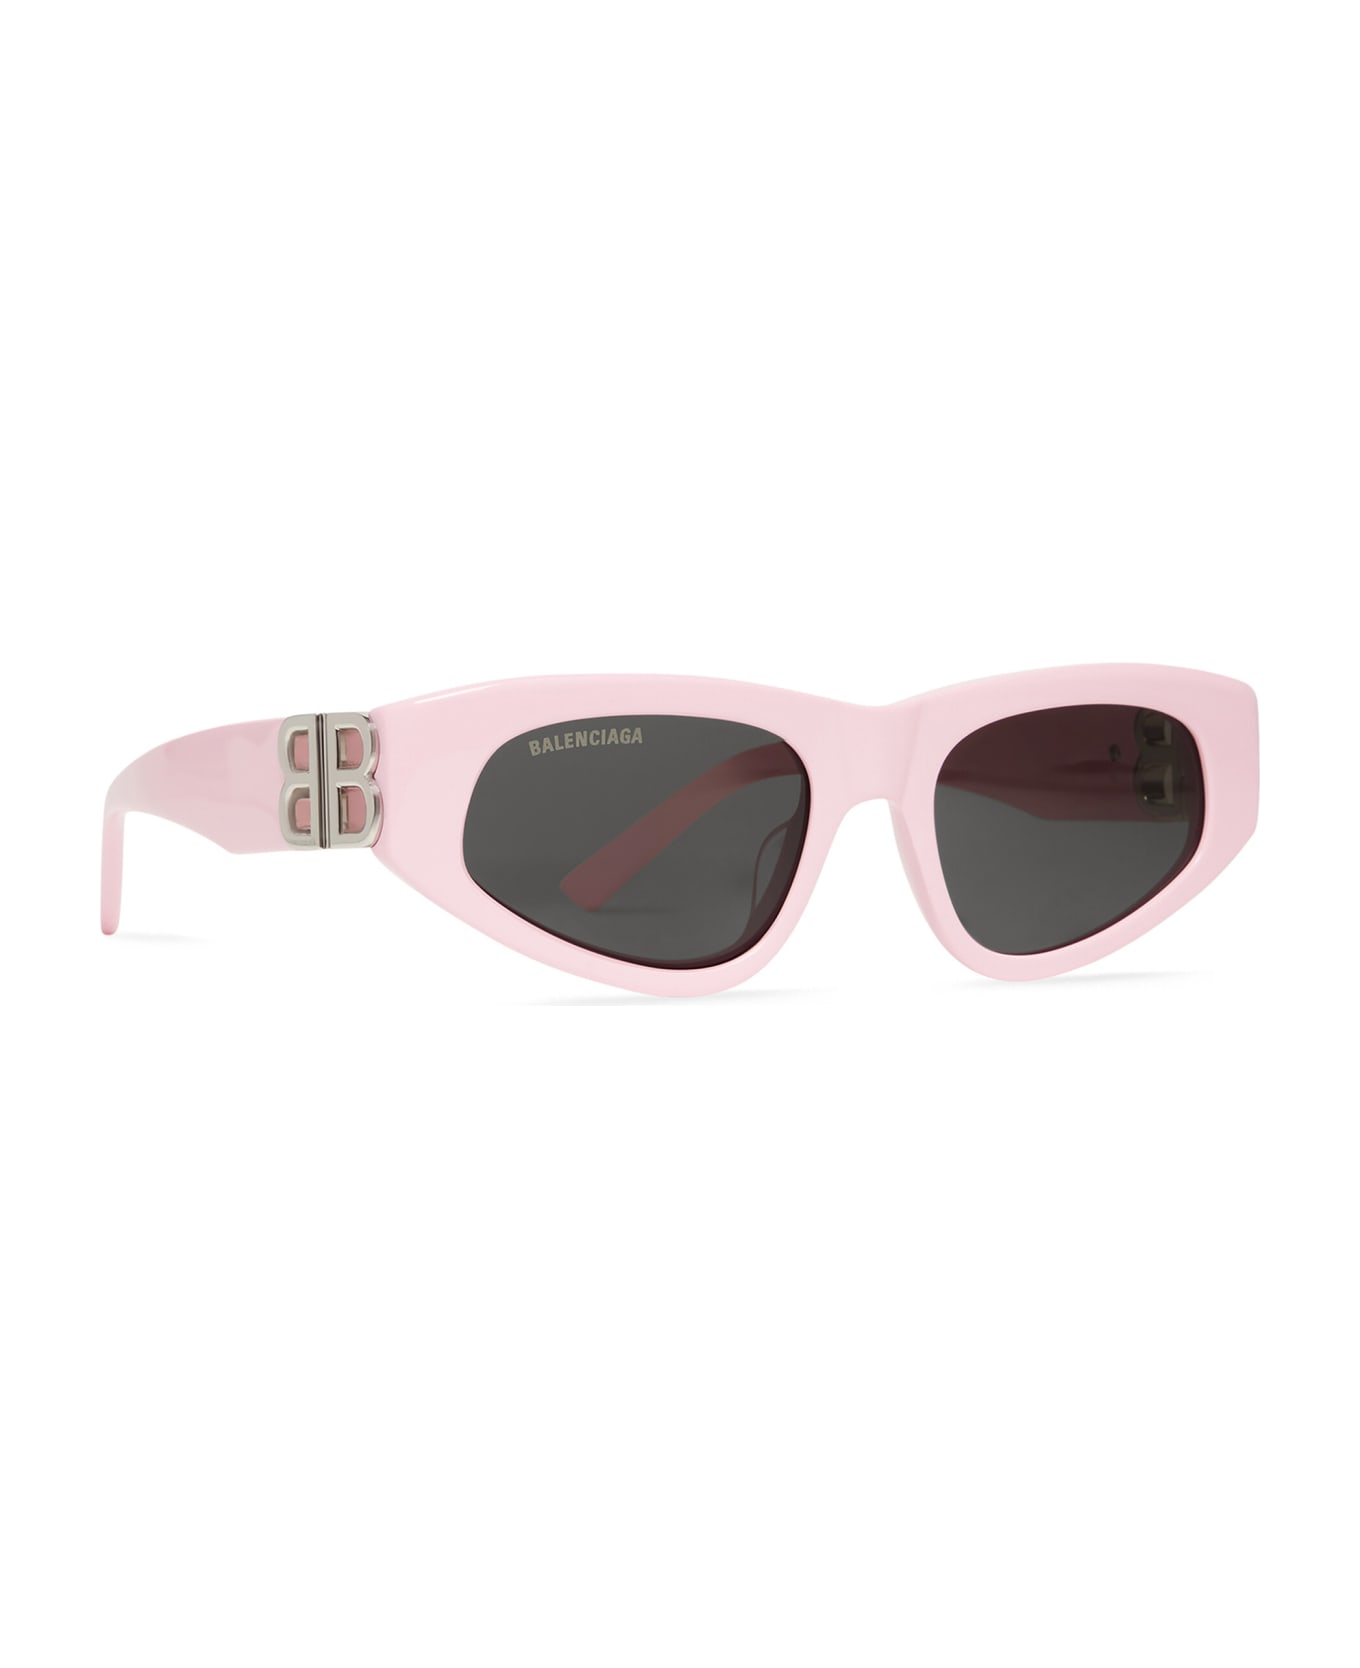 Balenciaga Eyewear Dynasty D-frame - Pink Sunglasses - pink